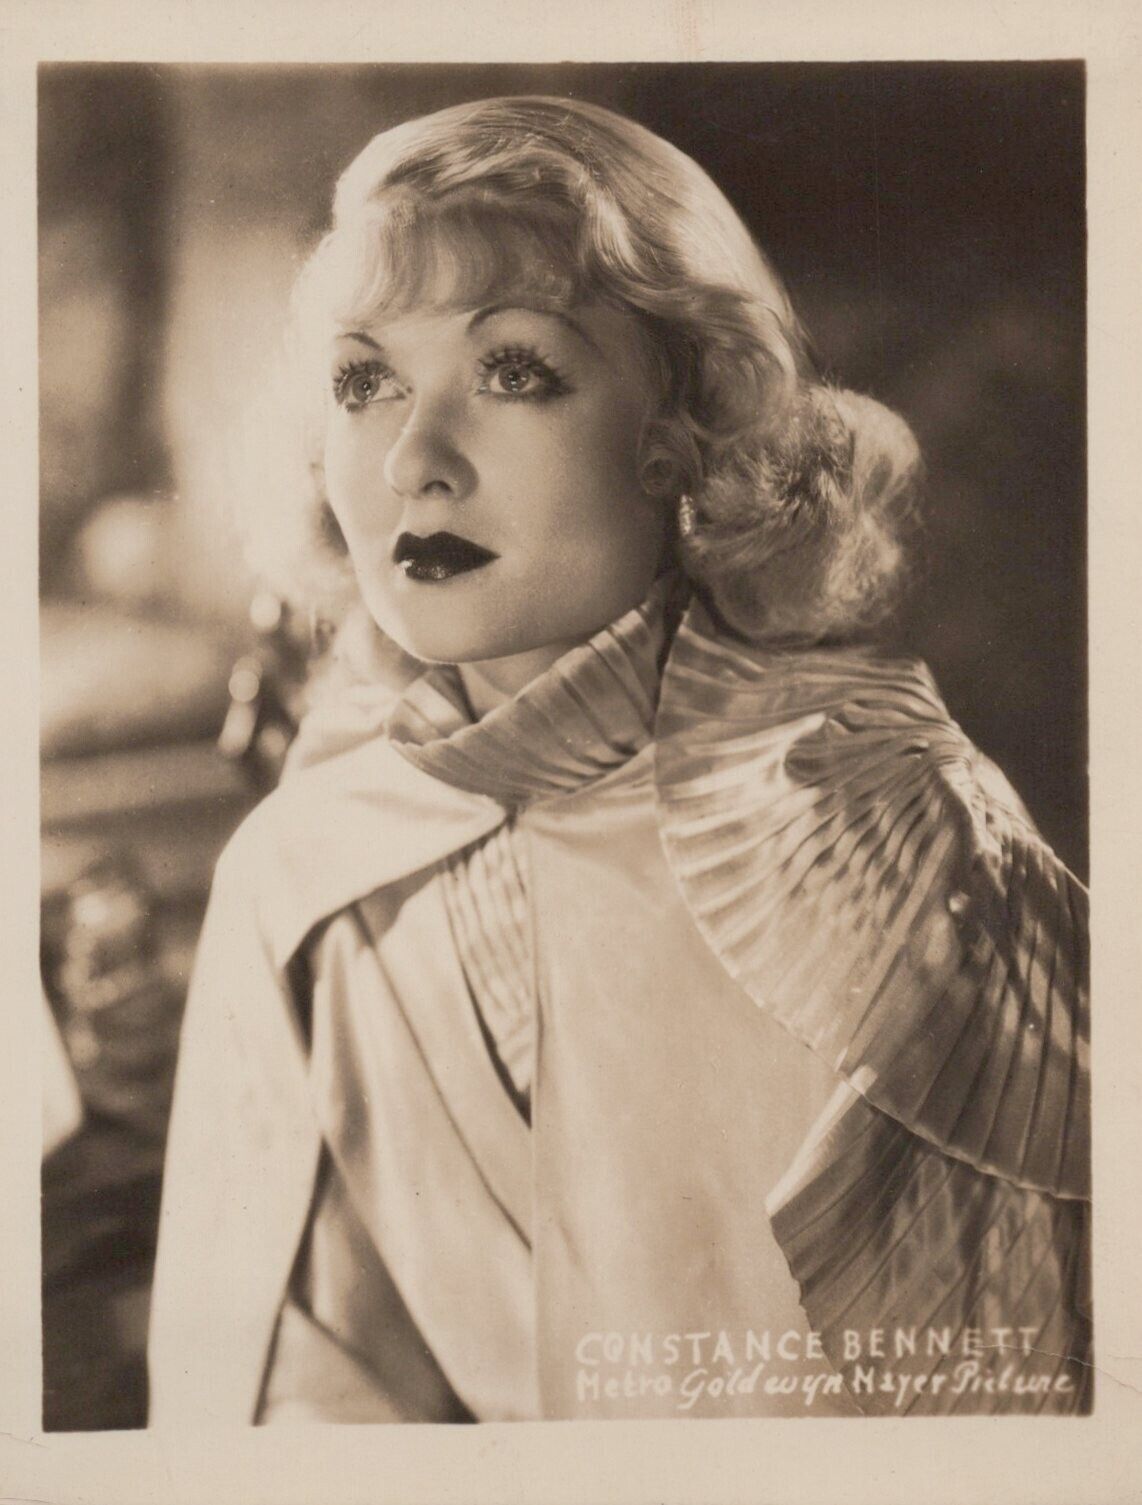 Constance Bennett (1930s) 🎬⭐ Glamorous Pose - Original Vintage MGM Photo K 196